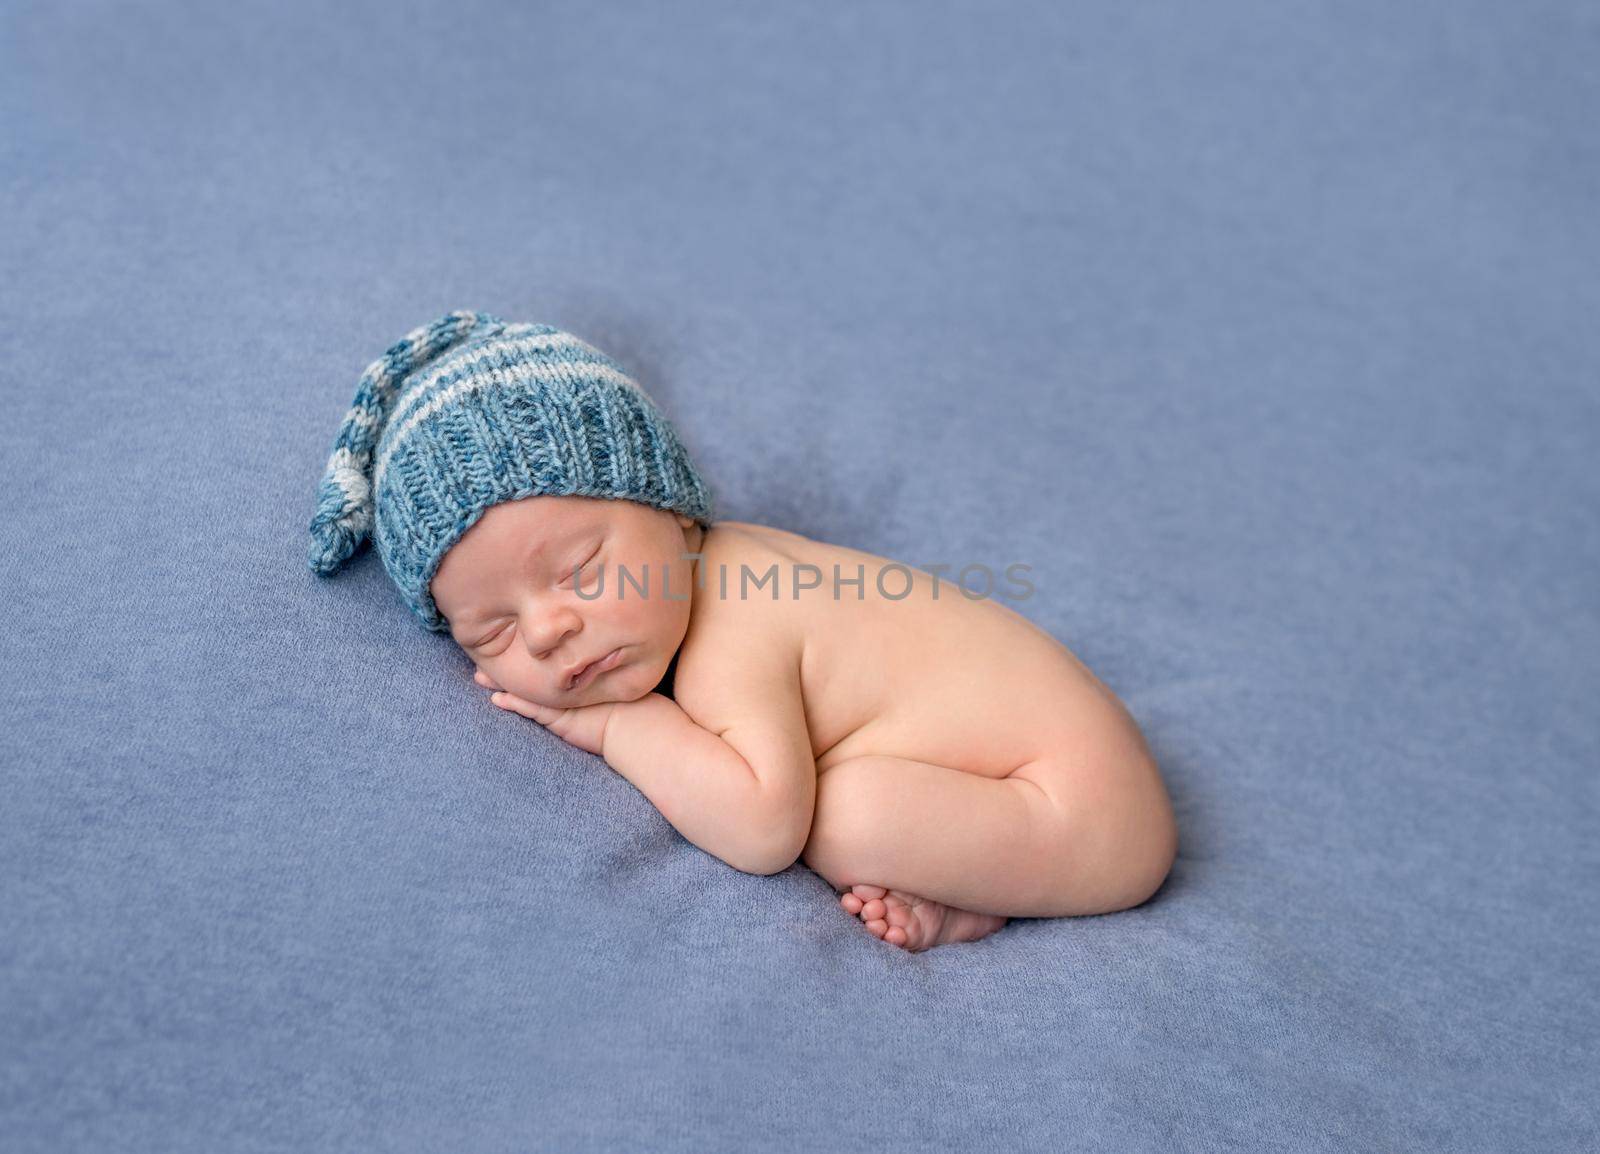 lovely naked newborn in knitted hat sleeping on gray blanket